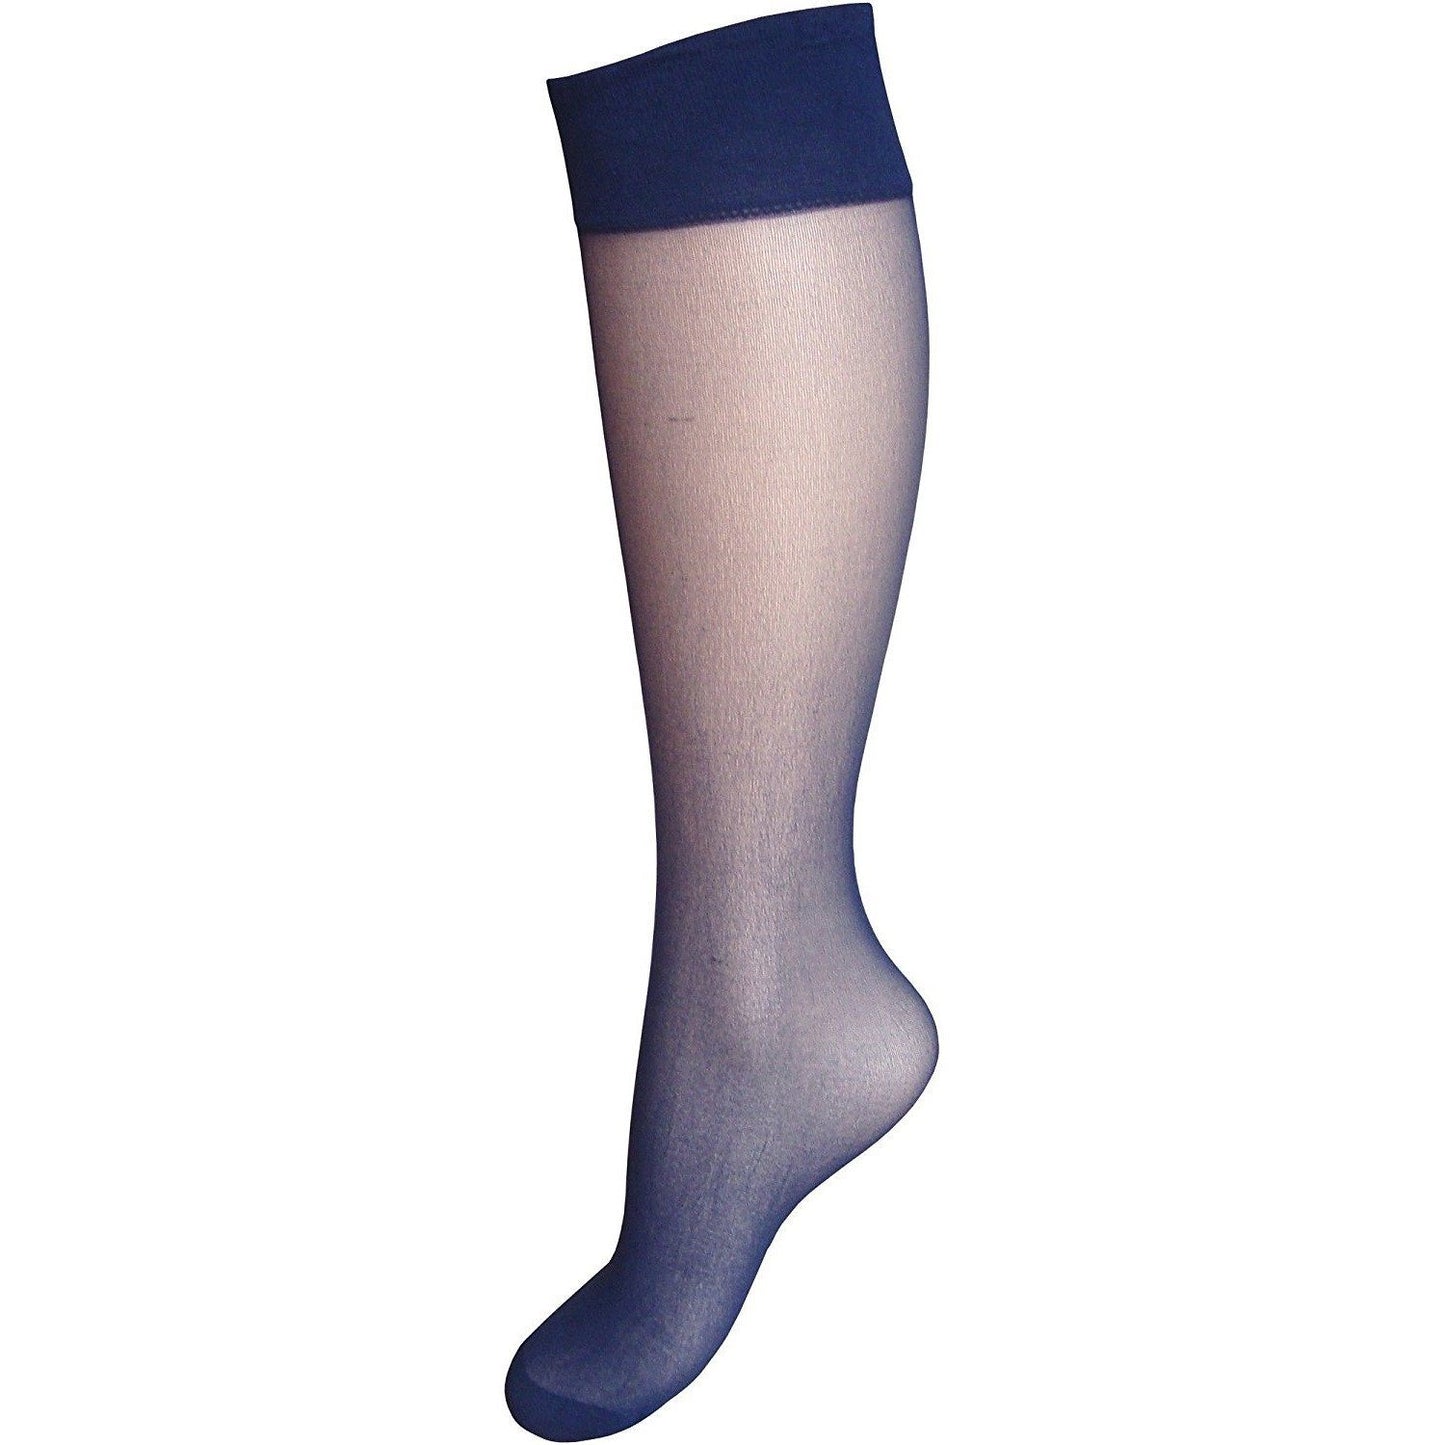 Silky Smooth Knit Knee High Trouser Socks 2 pair pack - Leggsbeautiful